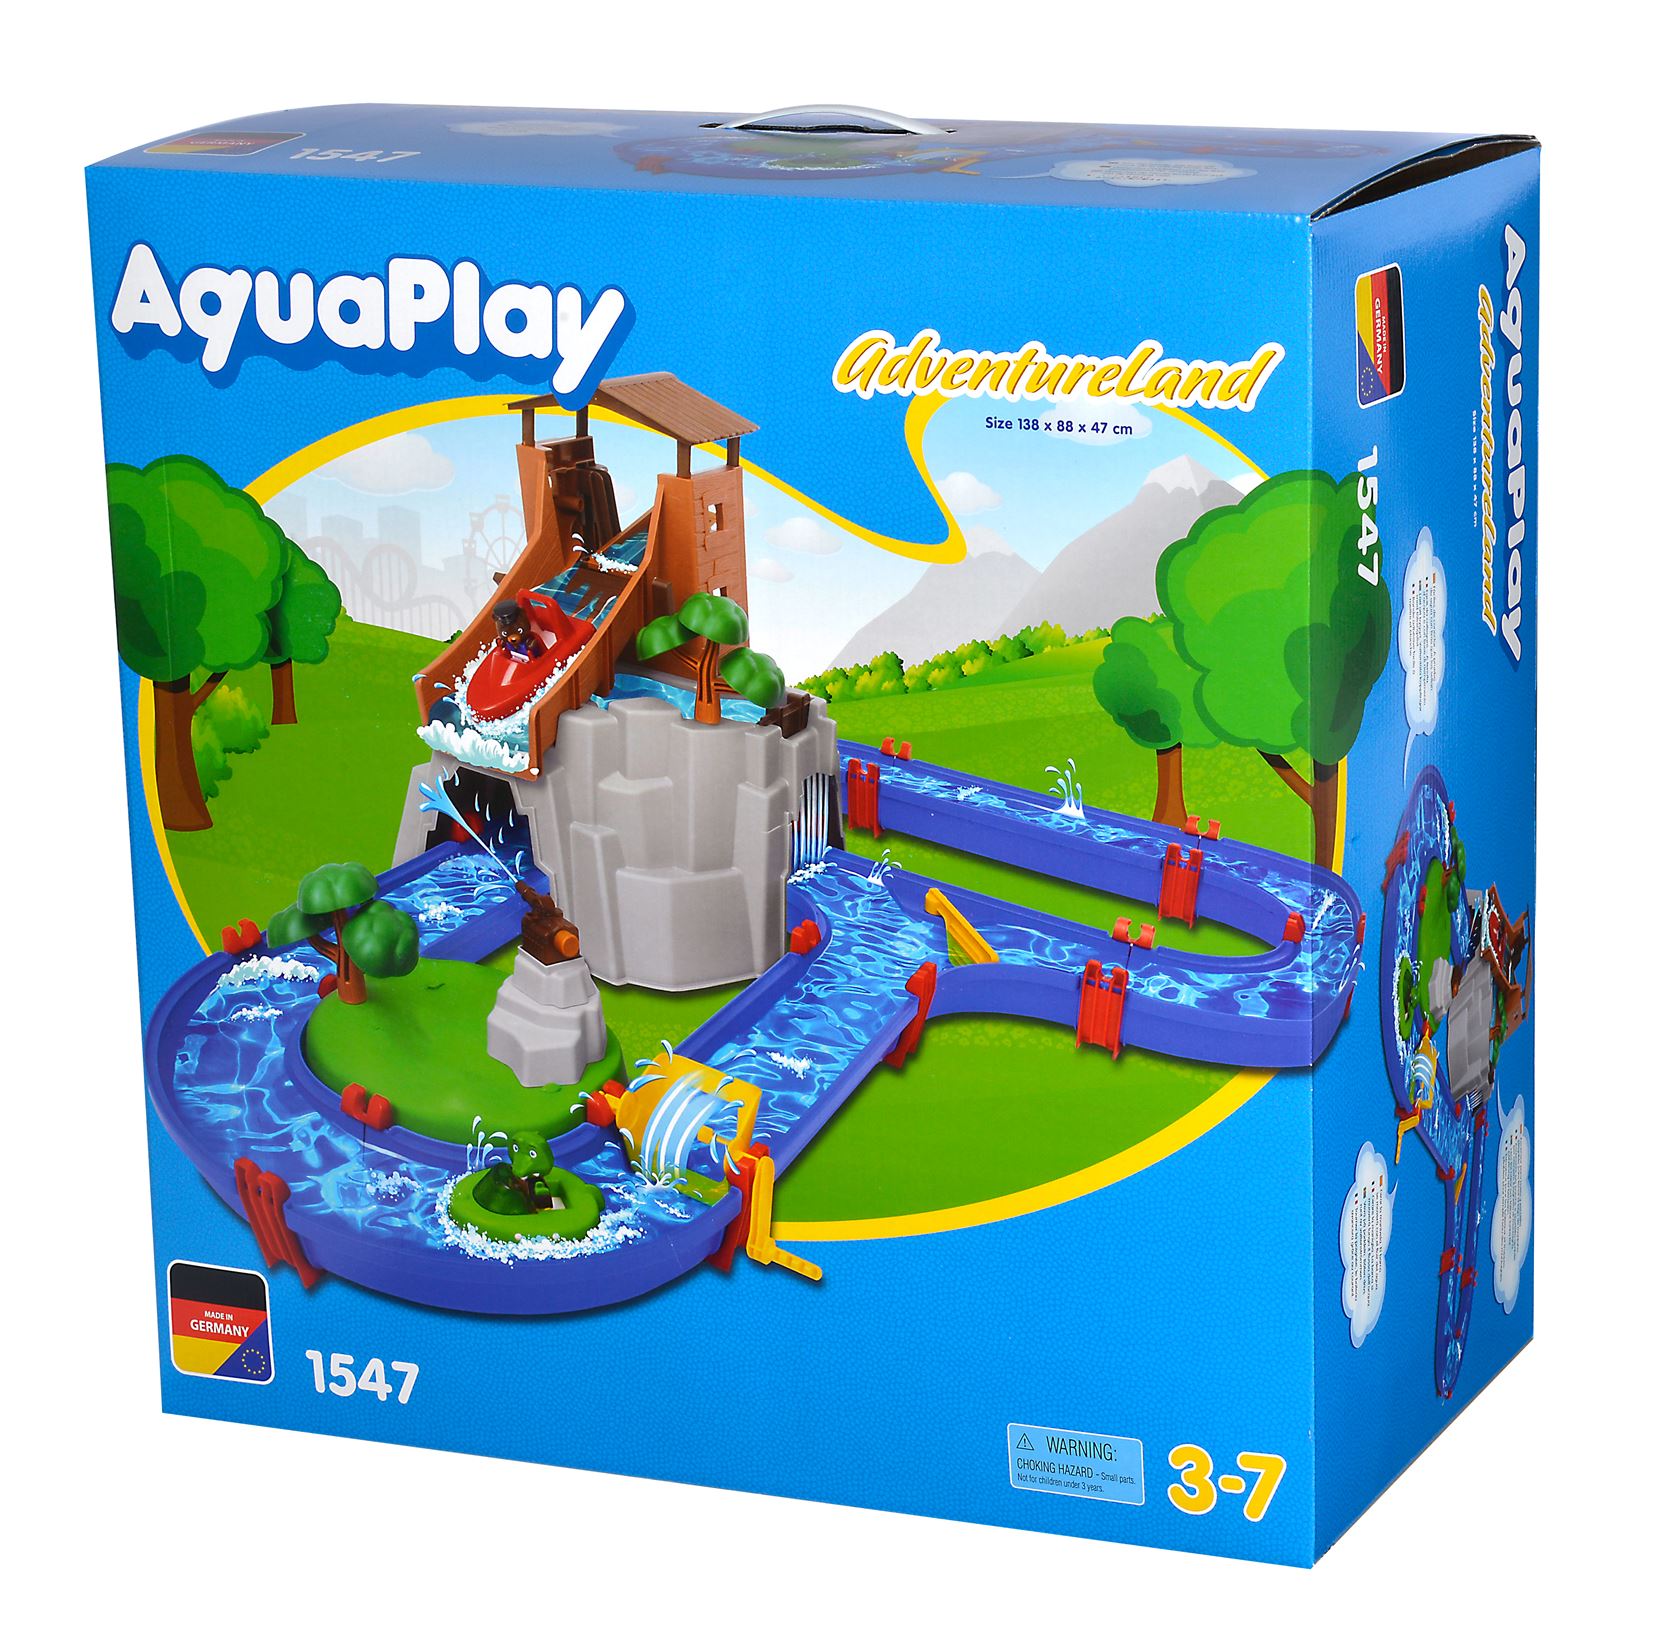 AquaPlay water course 'AdventureLand' - L138 x W88 x H47 cm